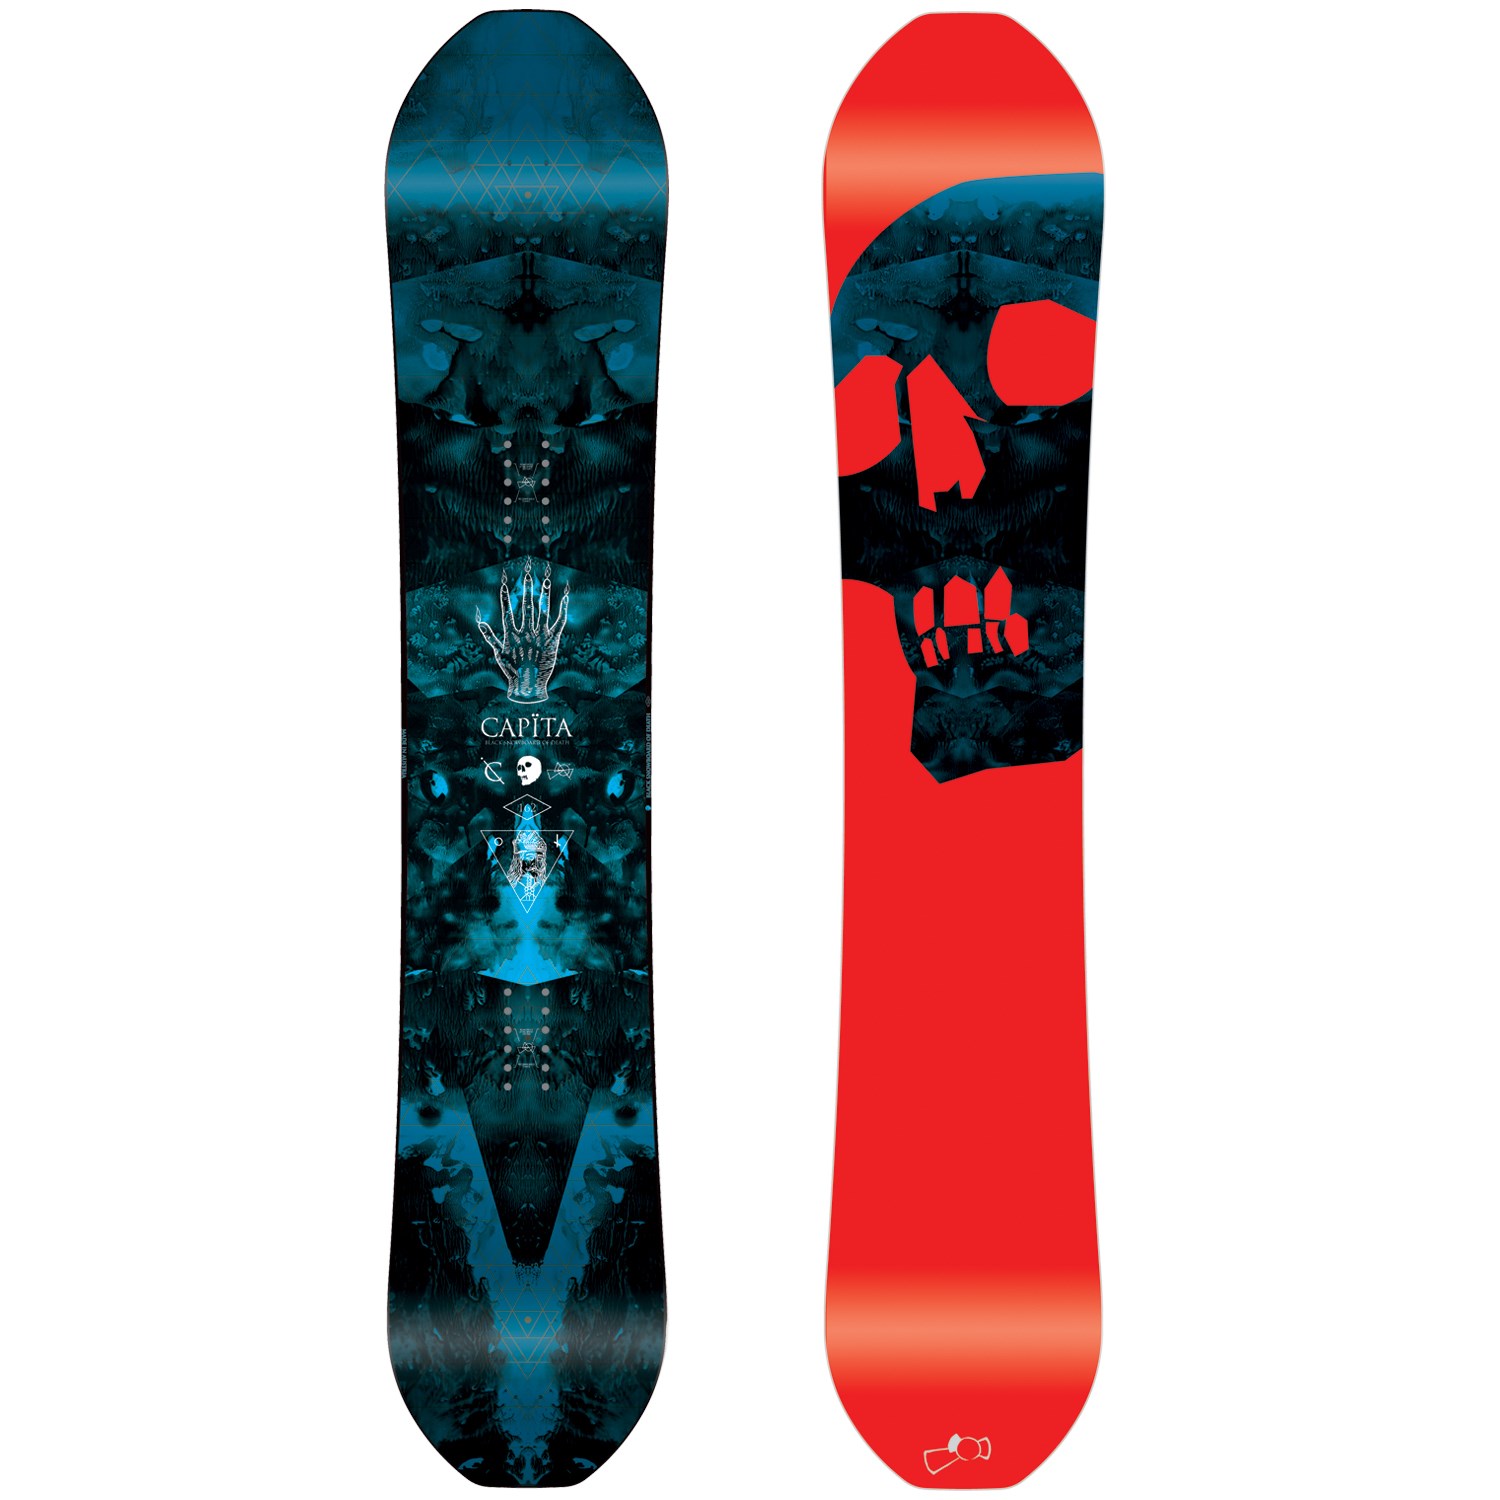 CAPiTA The Black Snowboard Of Death Snowboard 2014 evo